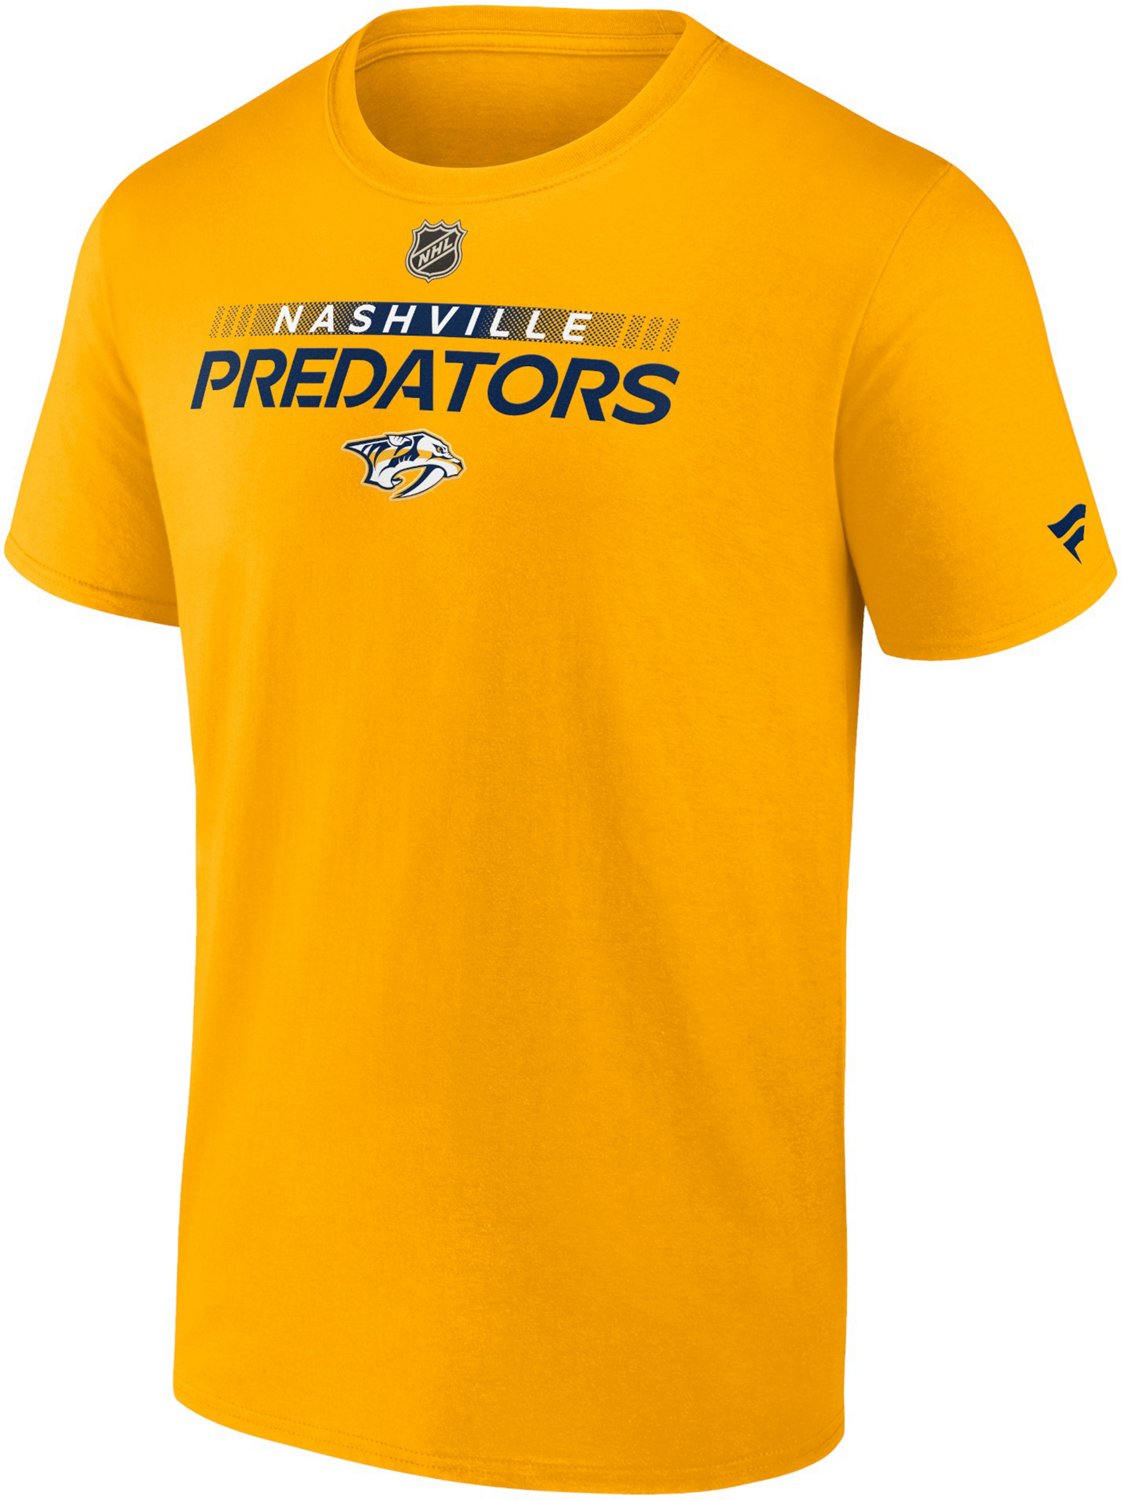 Shop by Team - Nashville Predators - Fantastic Sports Store